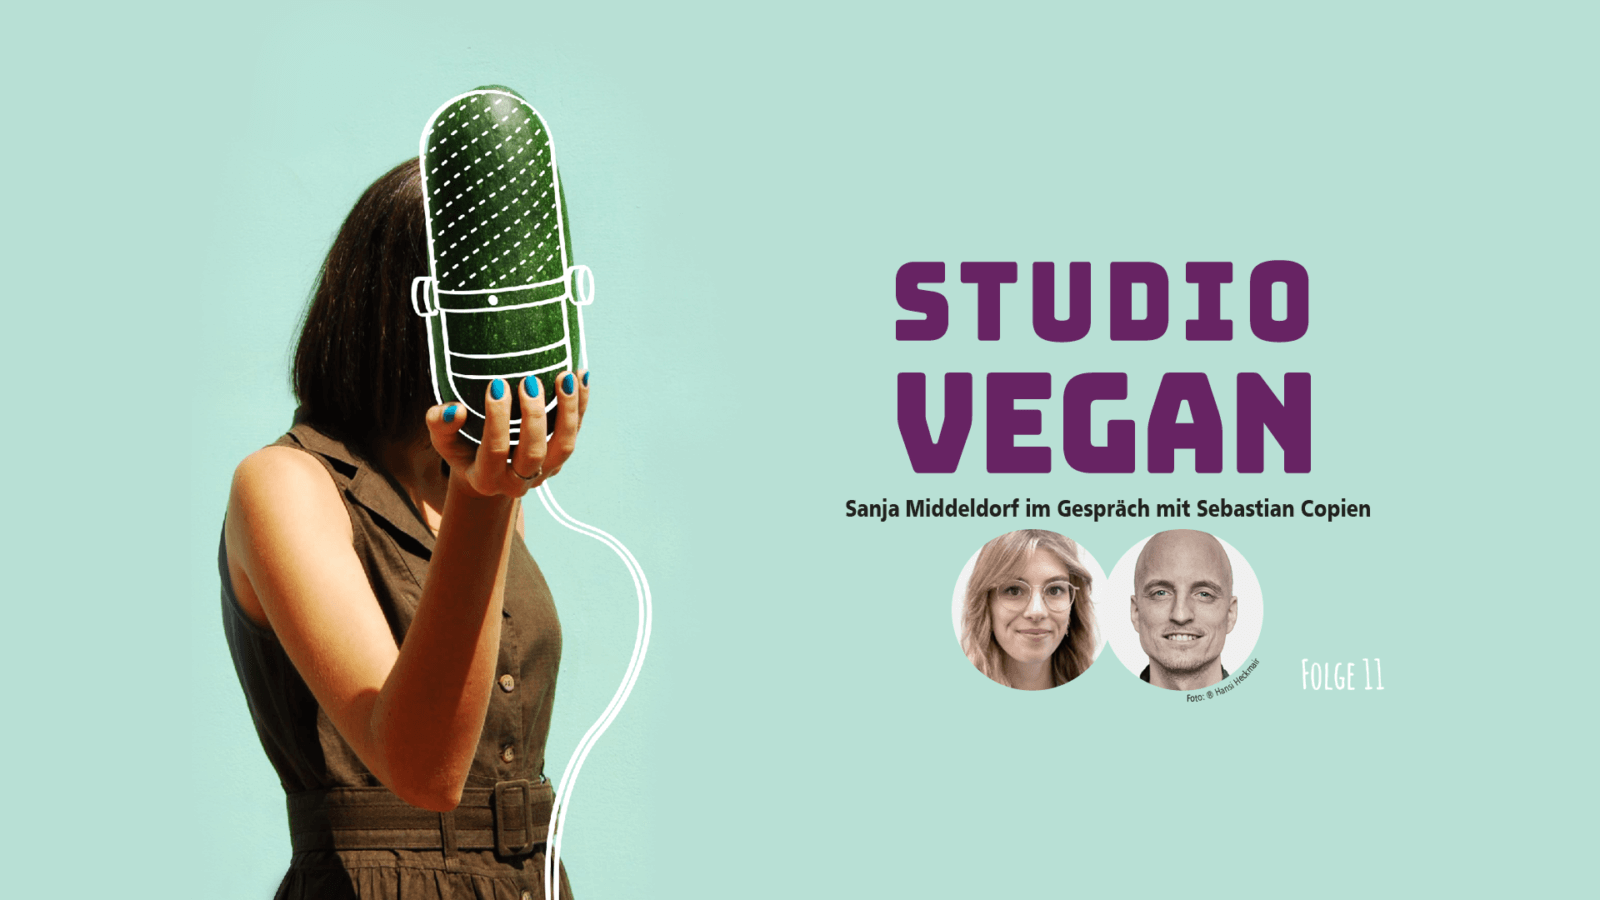 Studio Vegan Folge 11: Sanja Middeldorf im Gespräch mit Sebastian Copien